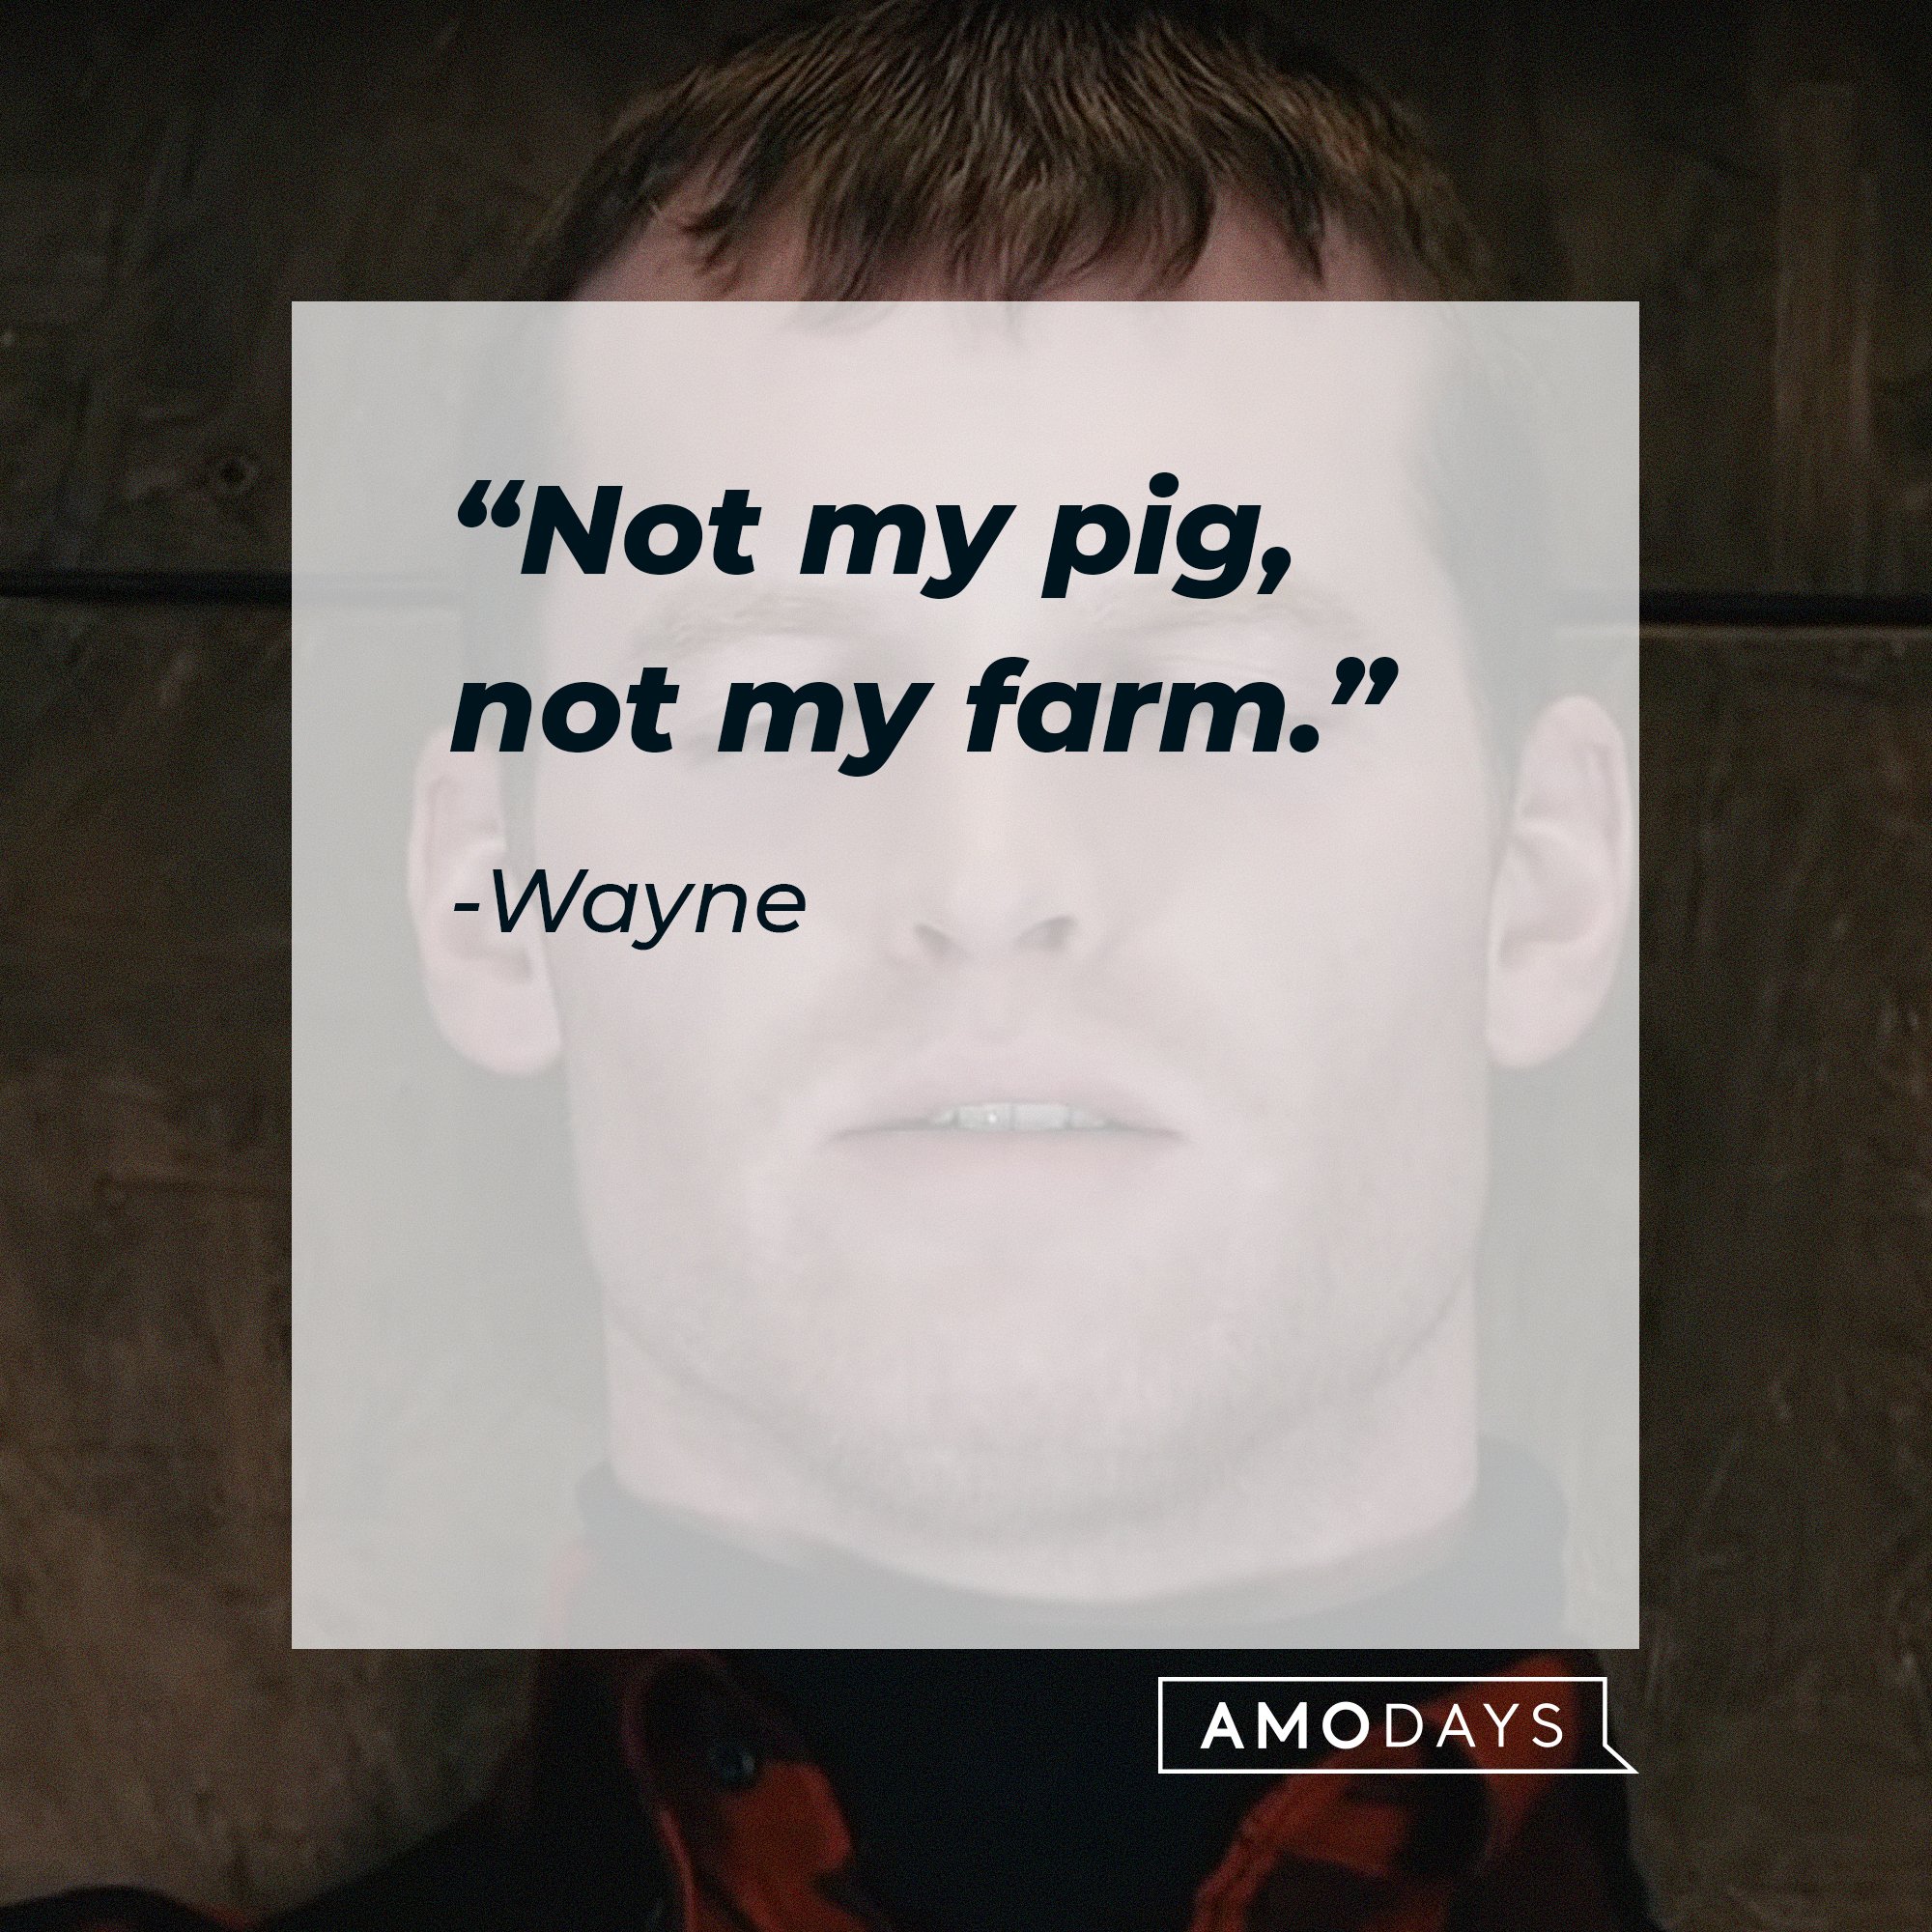 Wayne’s quote: “Not my pig, not my farm.” | Image: AmoDays